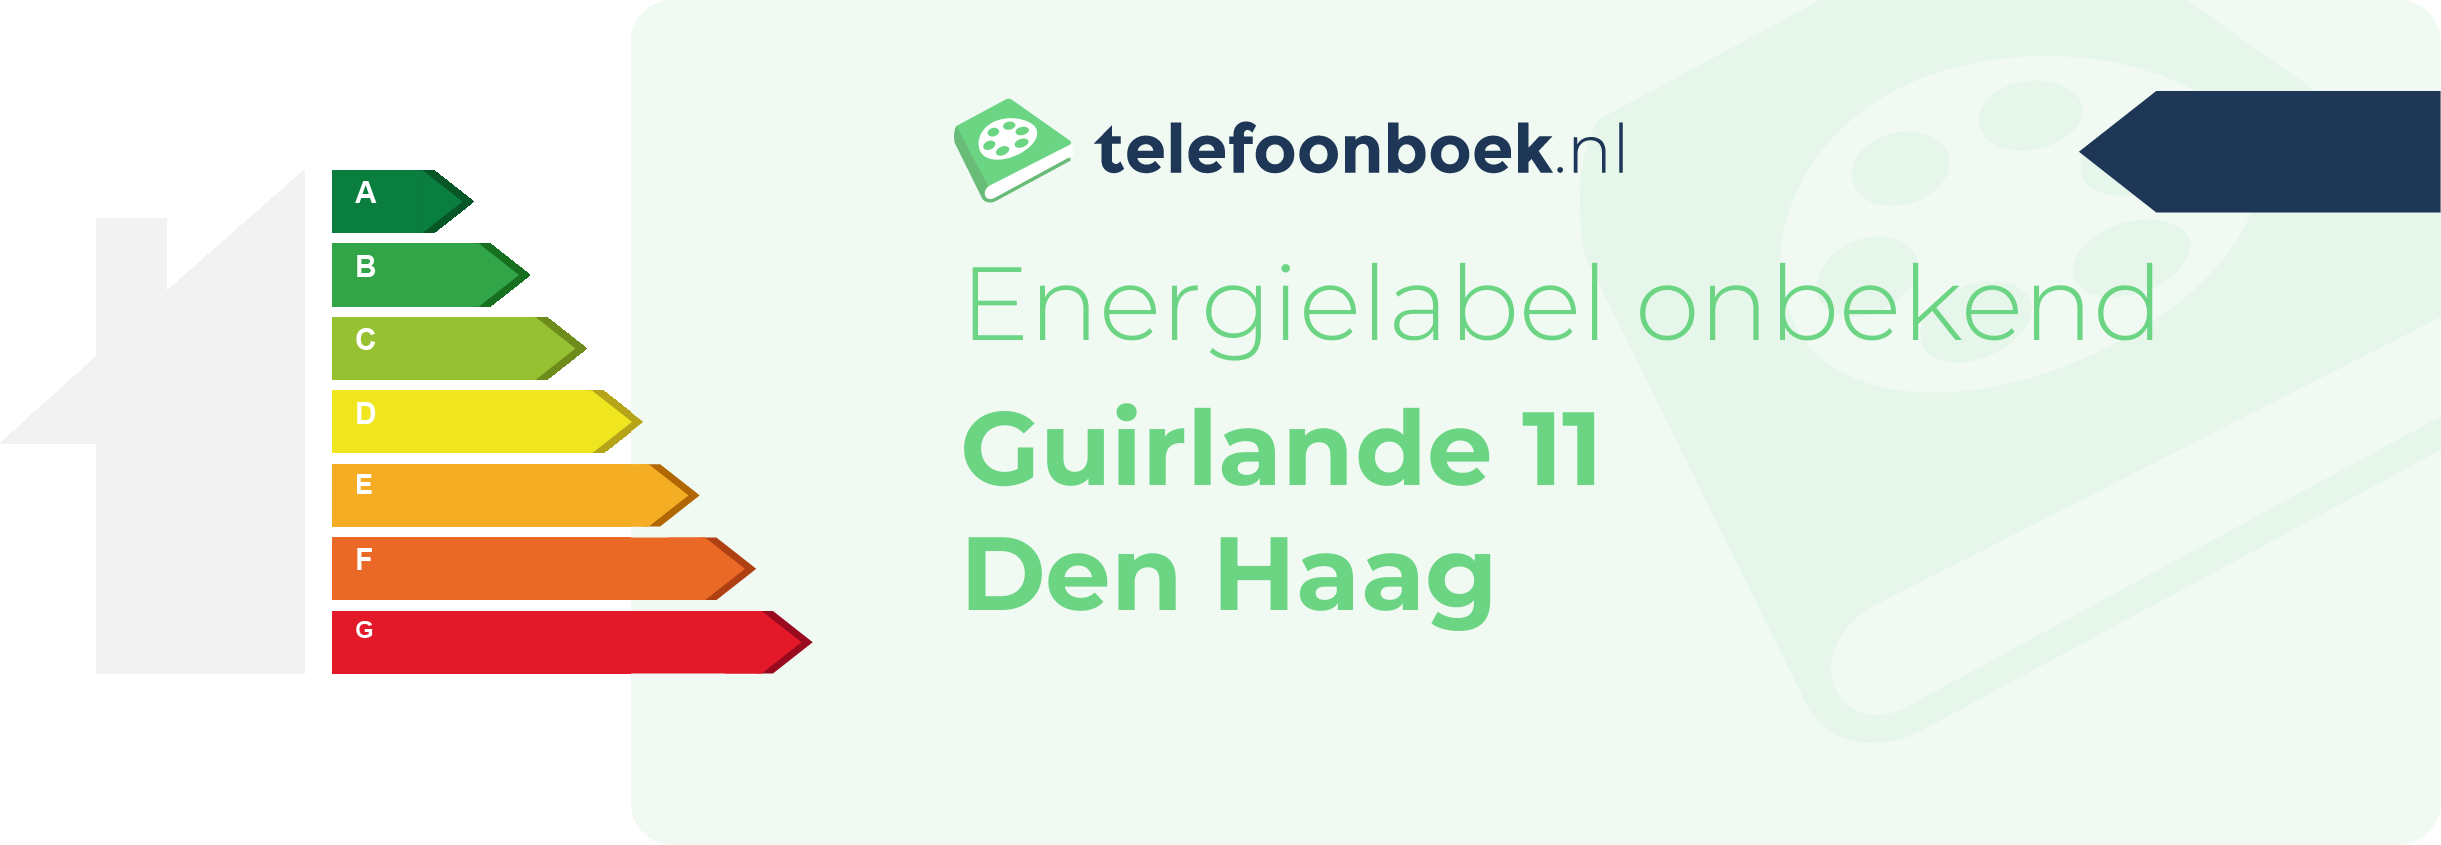 Energielabel Guirlande 11 Den Haag